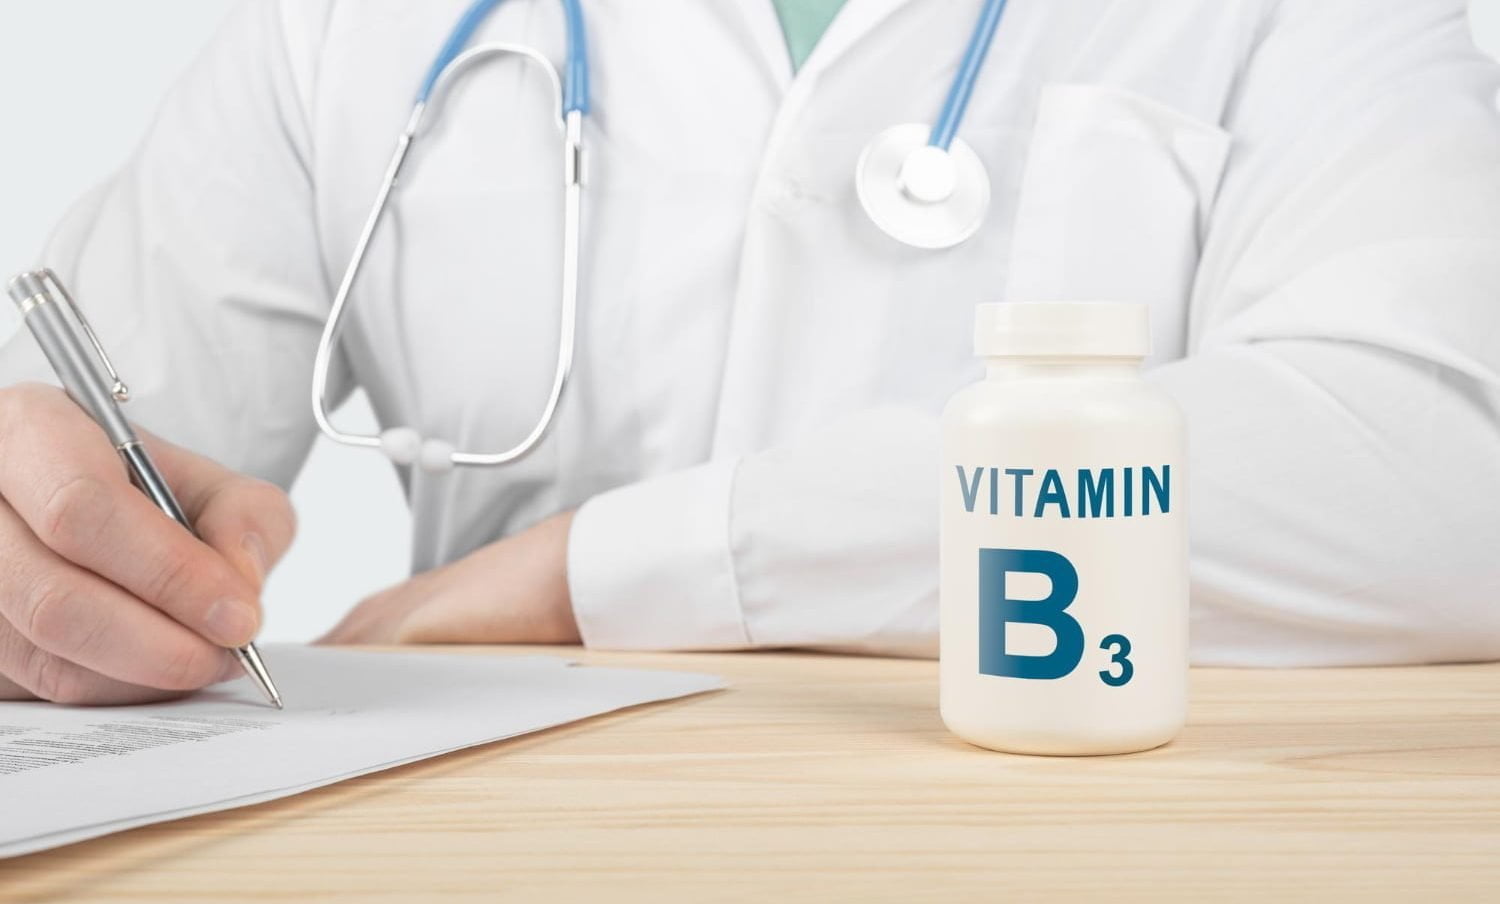 Tube de vitamine B3